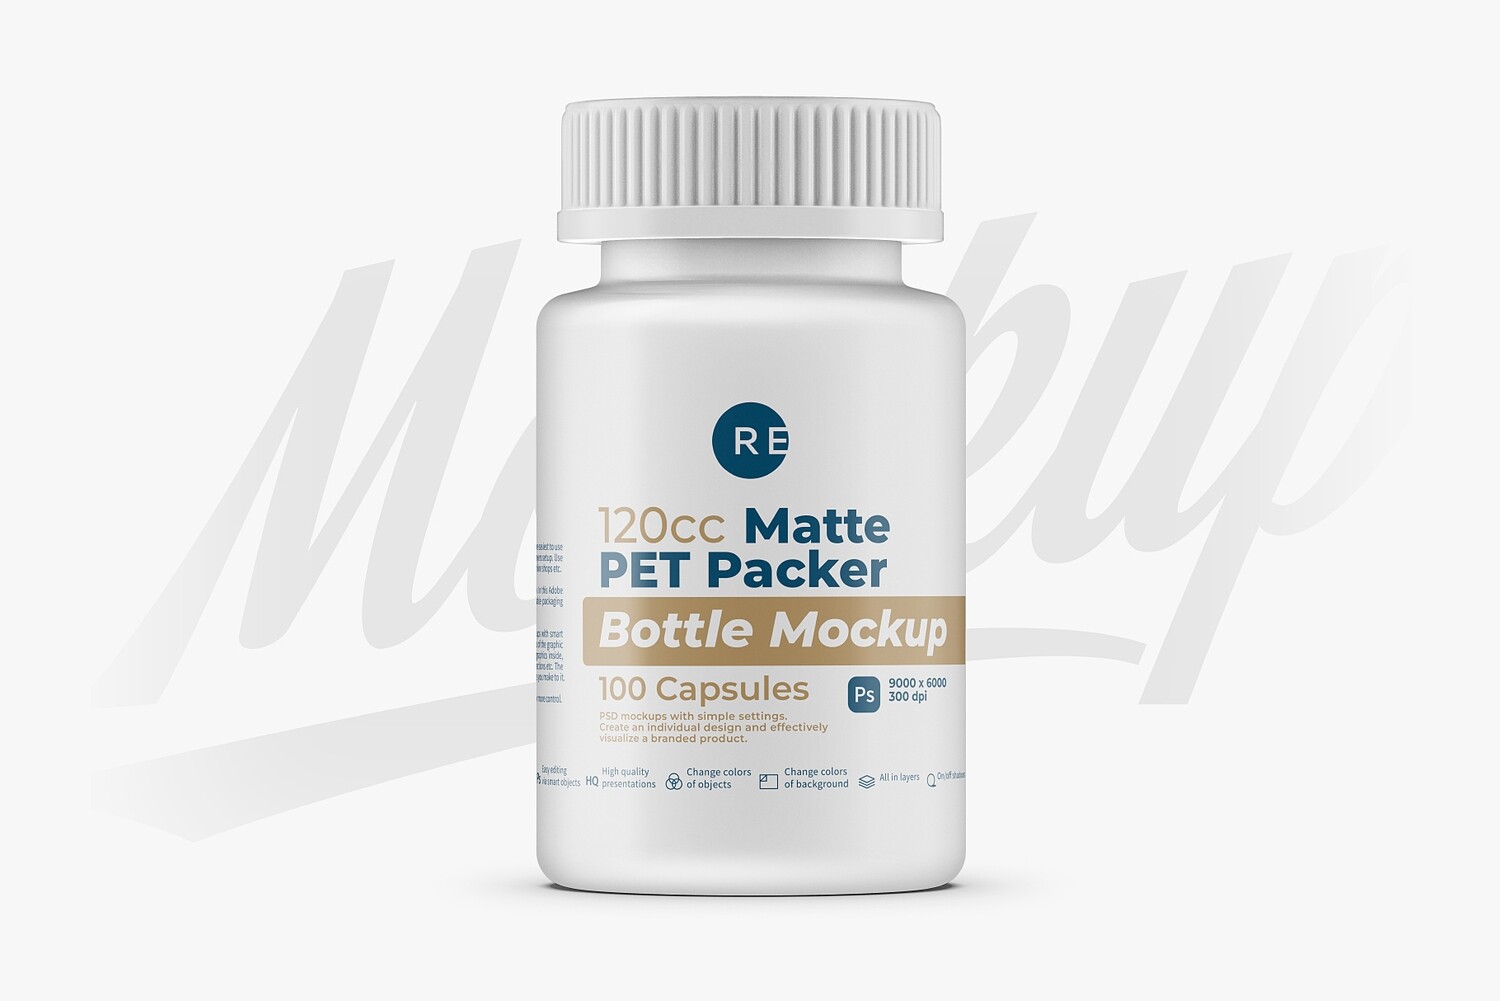 Matte Pills Bottle Mockup 120cc